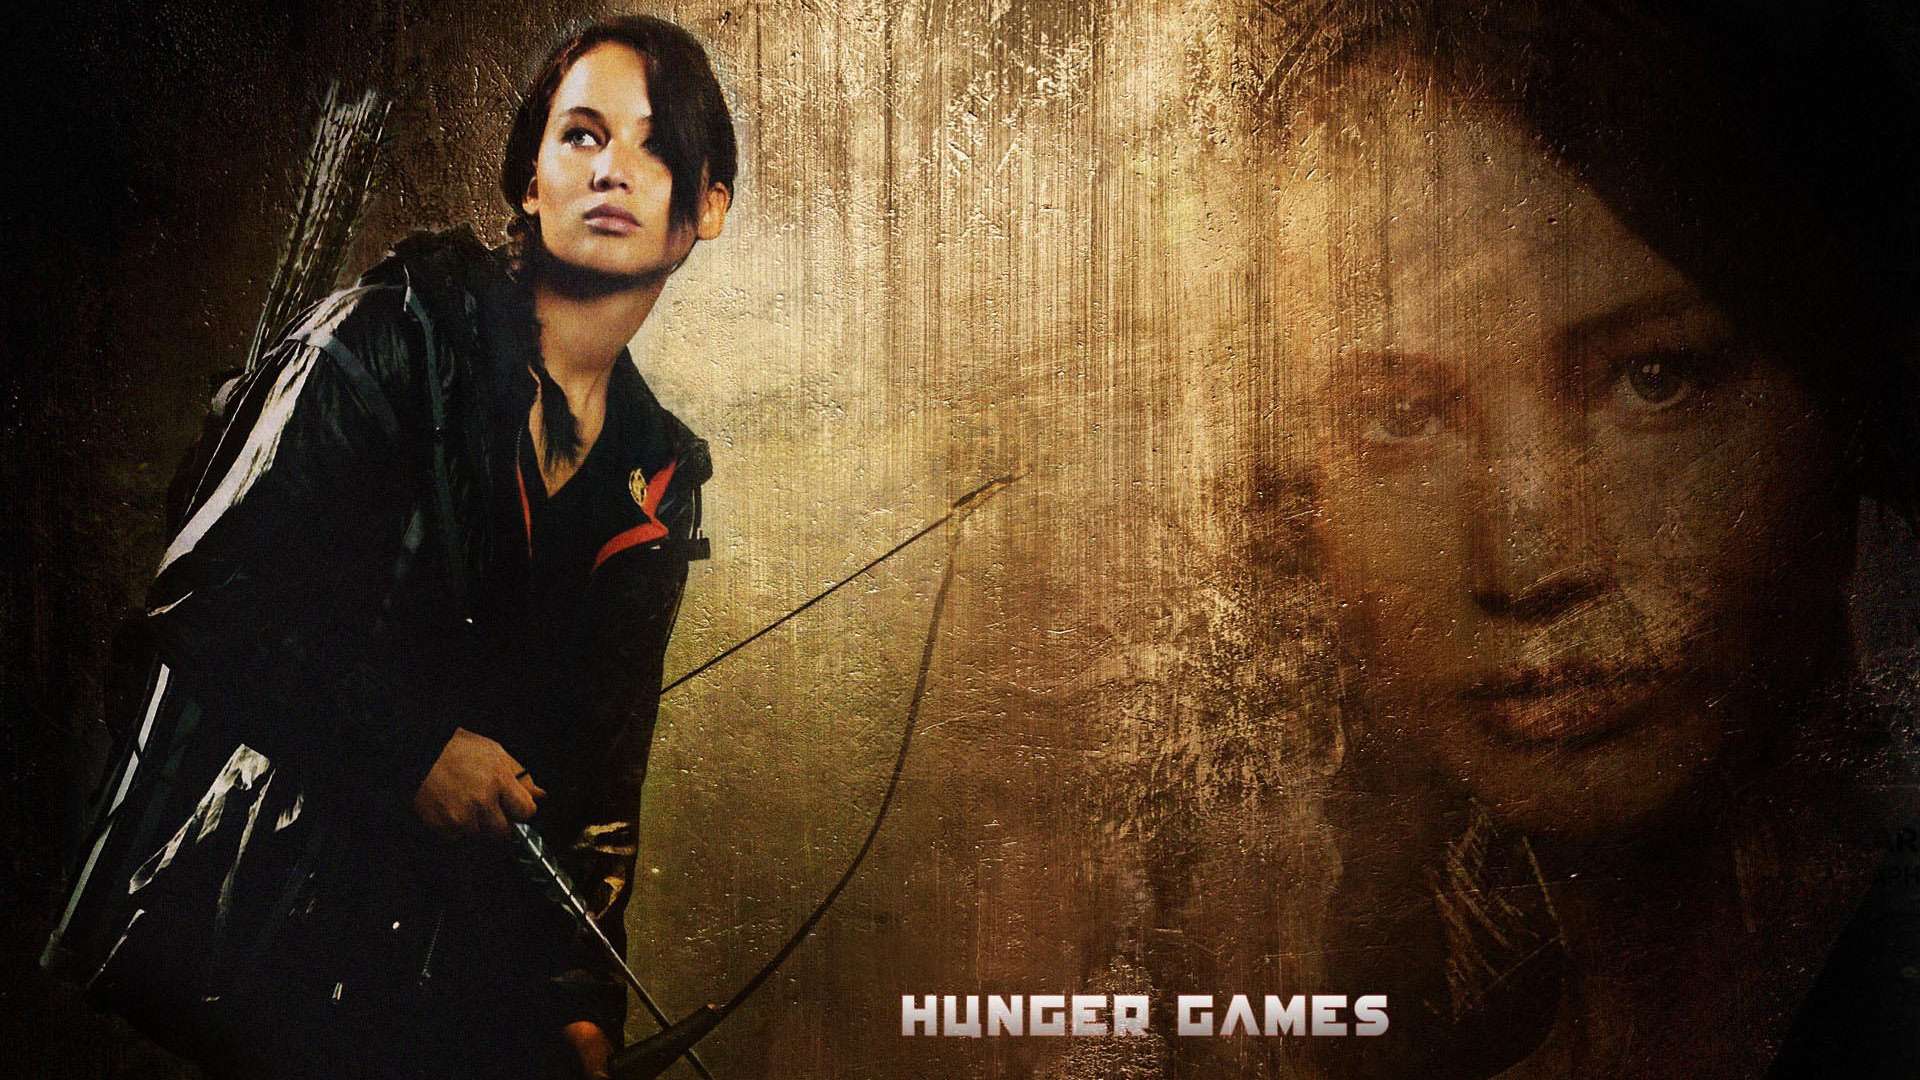 Jennifer Lawrence For The Hunger Games Movie Wallpaper